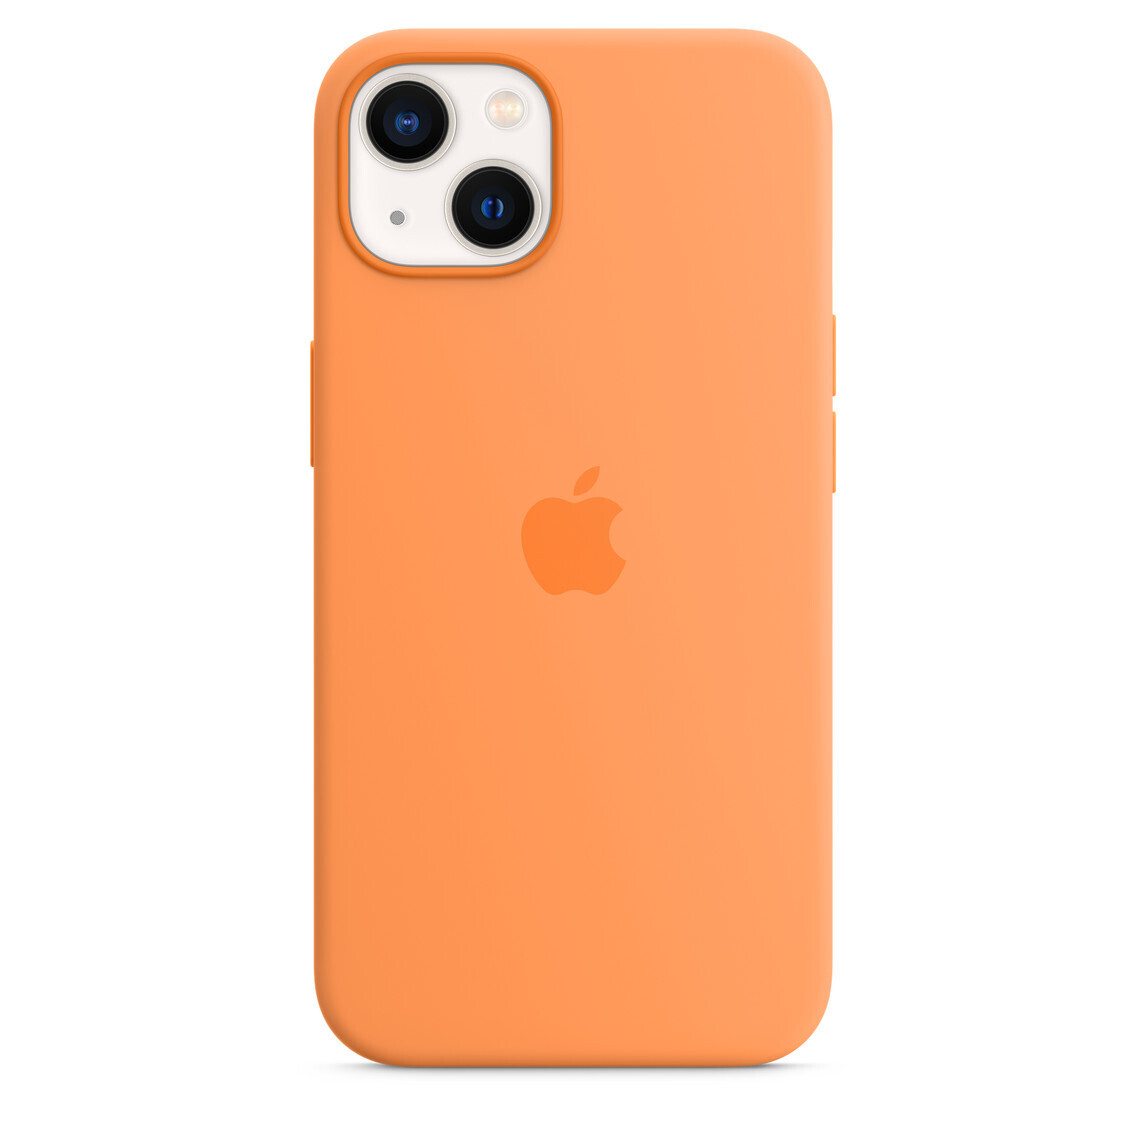  گارد سیلیکونی آیفون 11 پرو رنگ نارنجی 